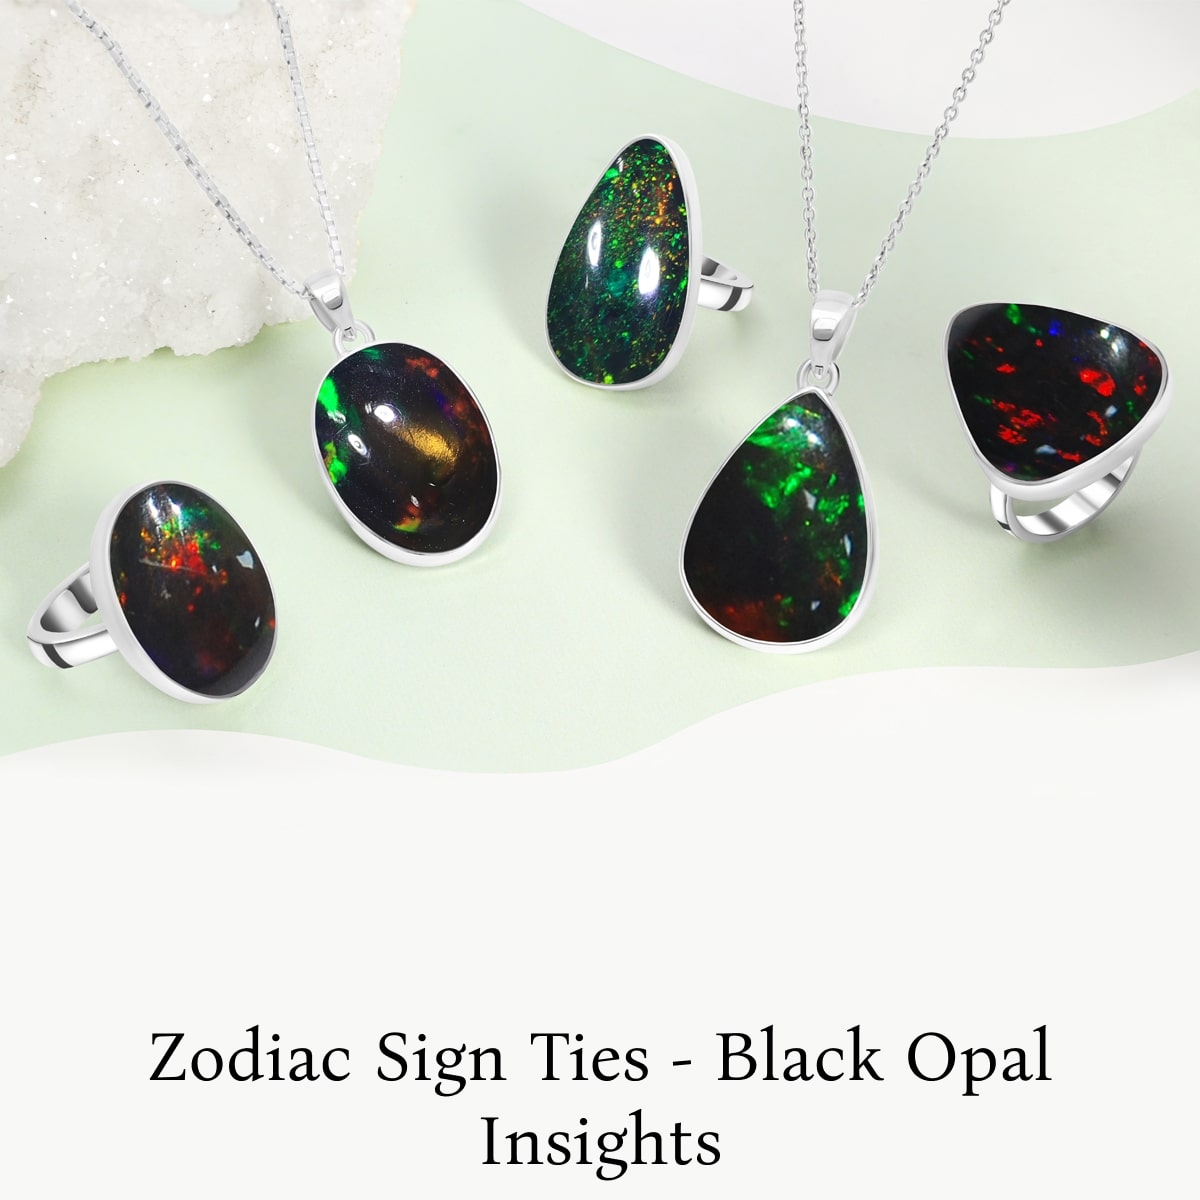 Zodiac Sign Associated with Black Opal